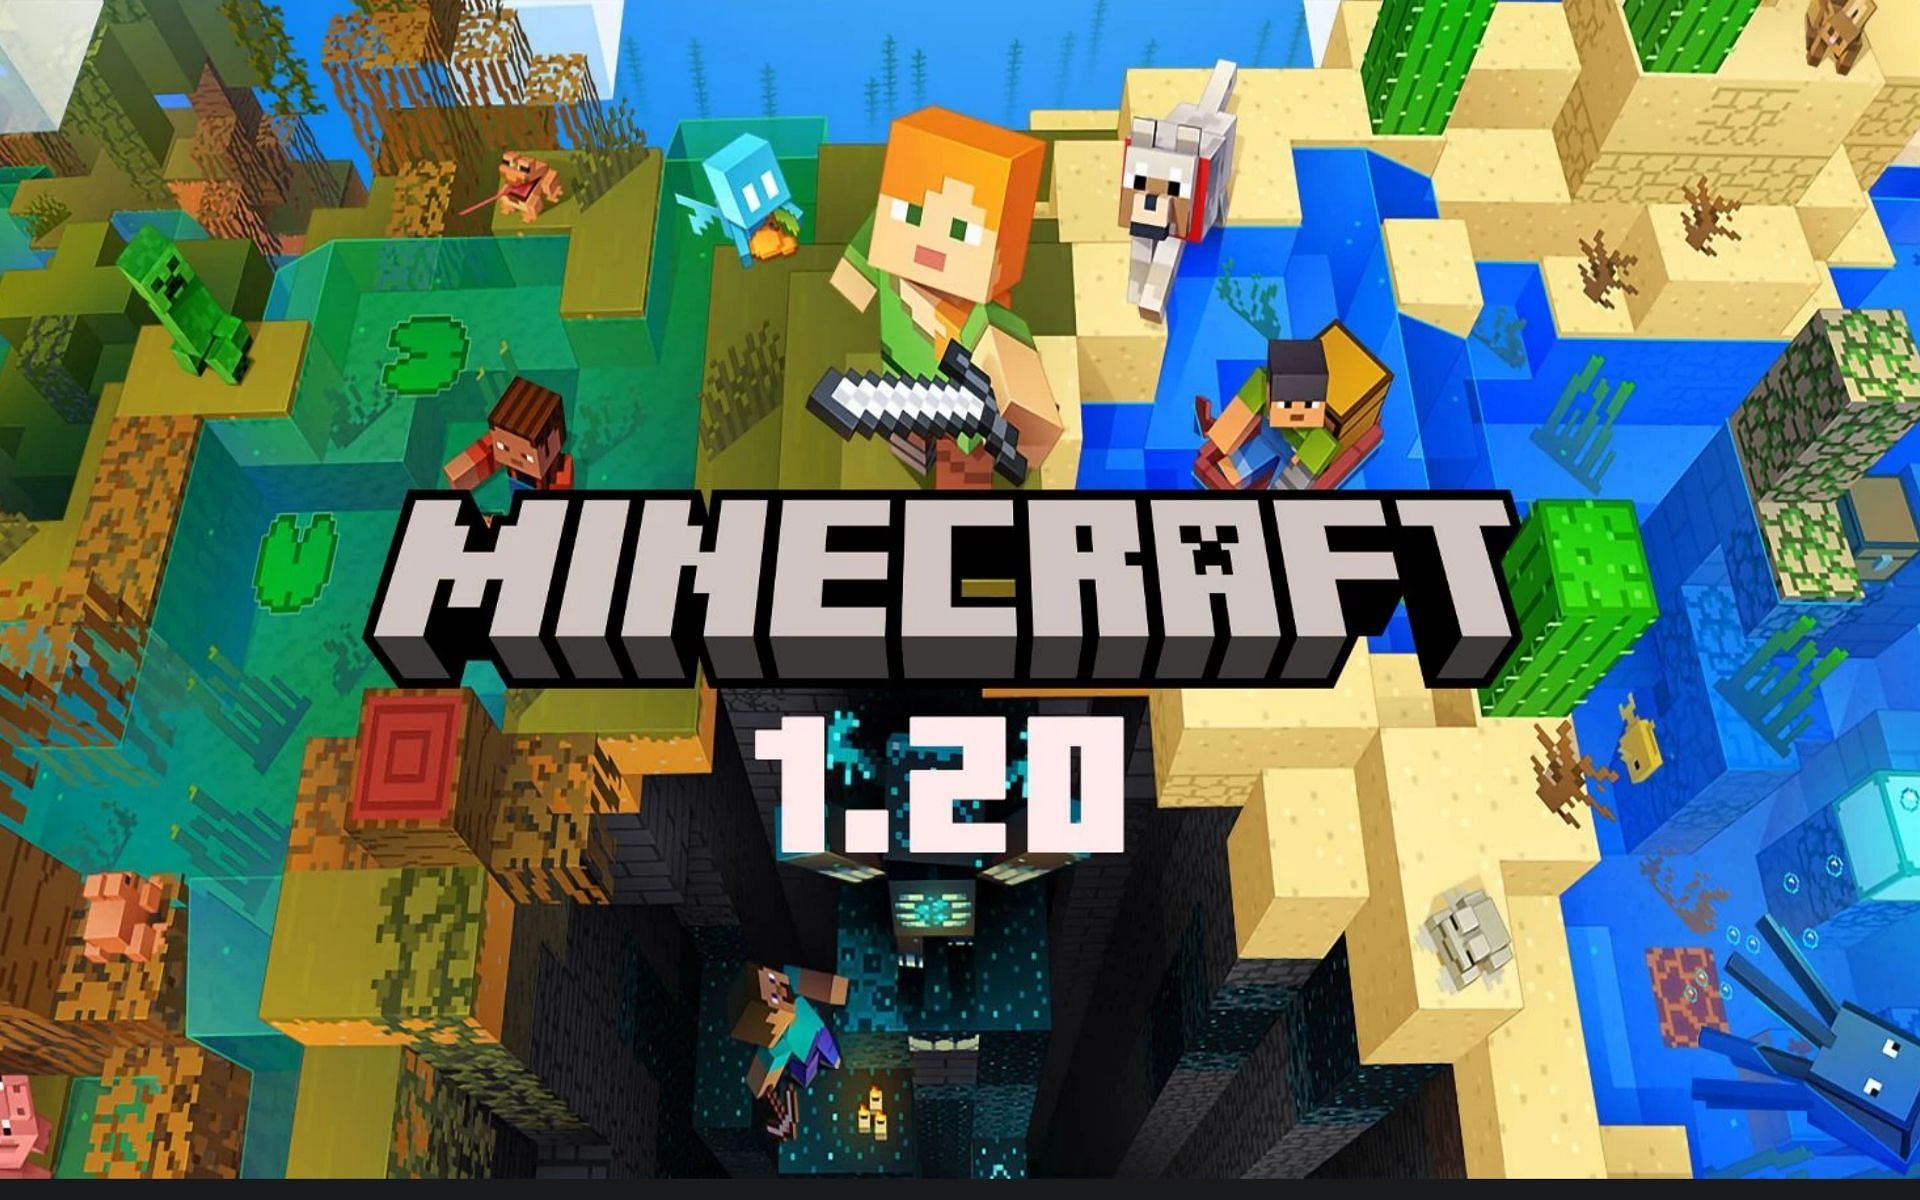 Minecraft 1.20: Everything we know about Minecraft 1.20